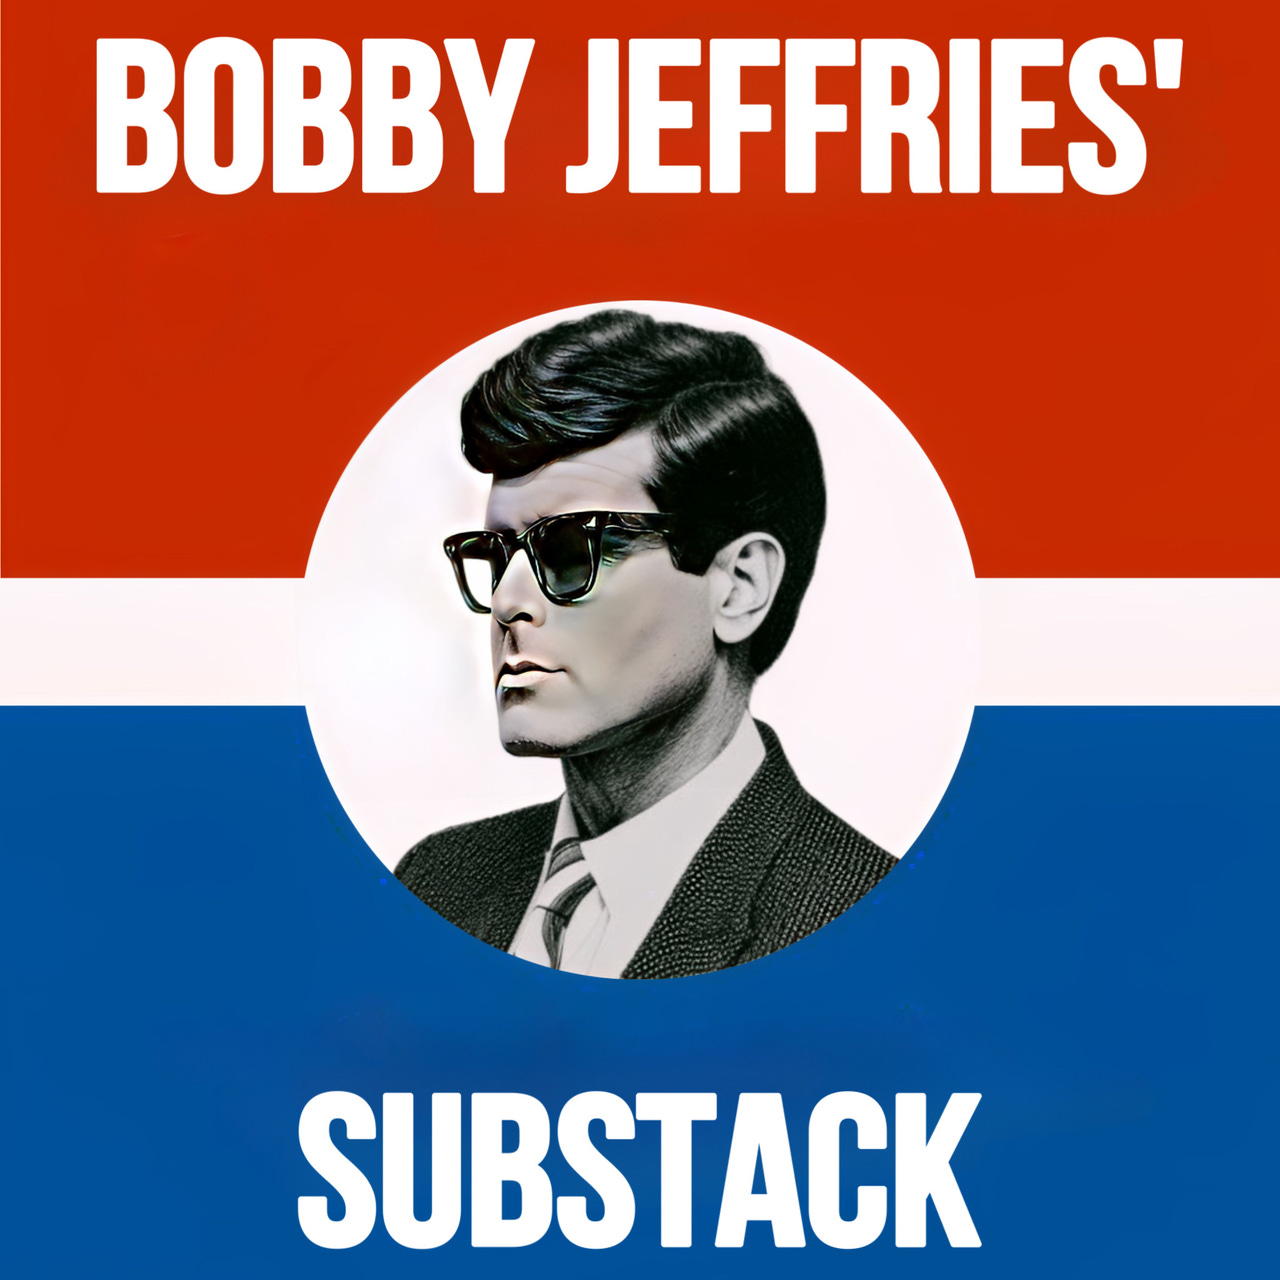 Bobby Jeffries' Substack